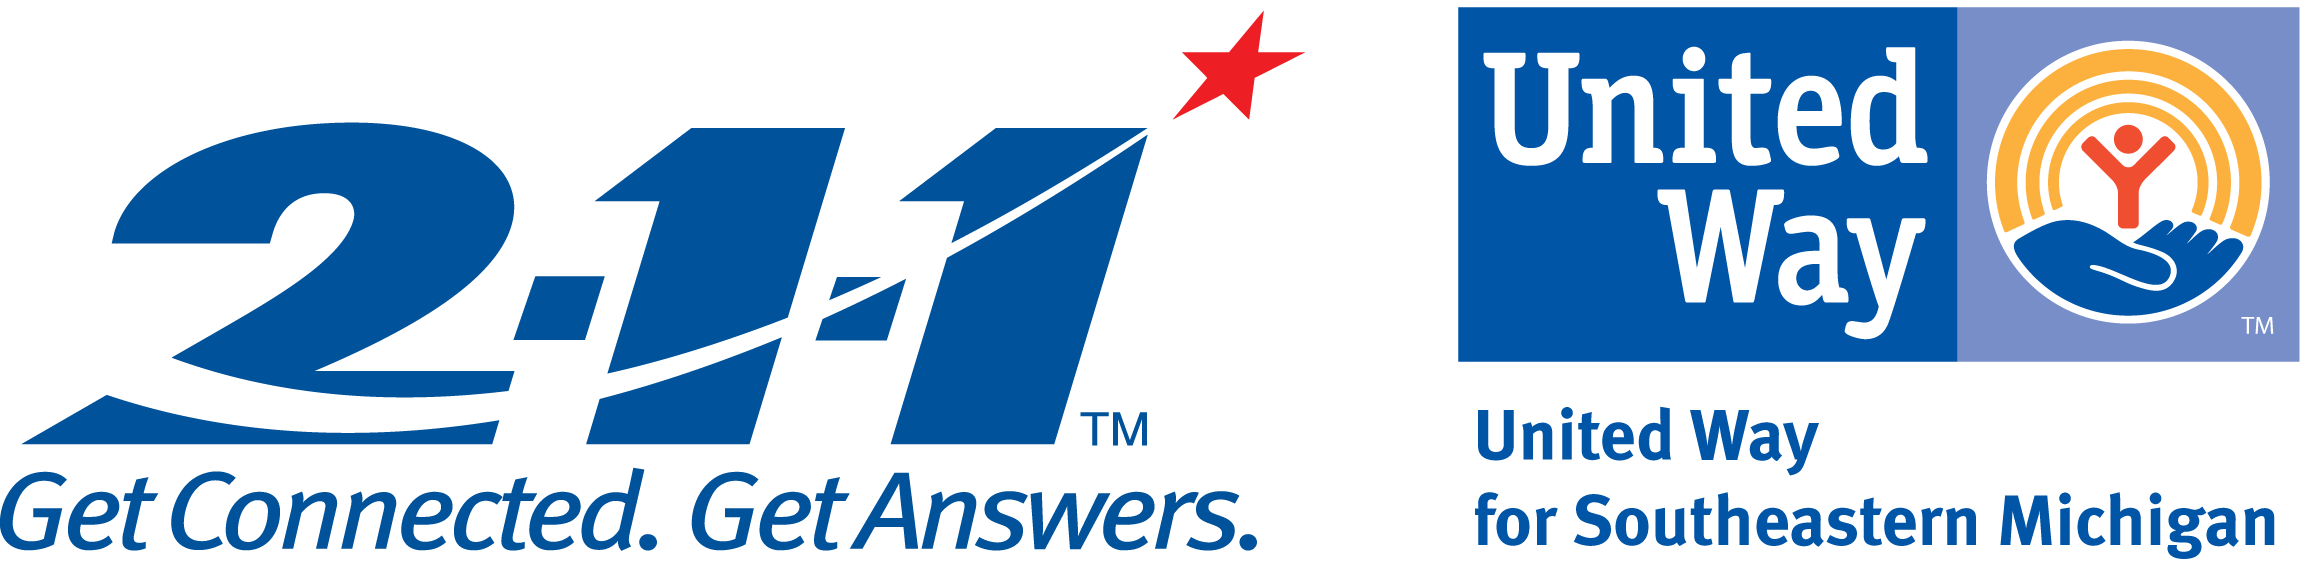 Image result for 211 united way logo